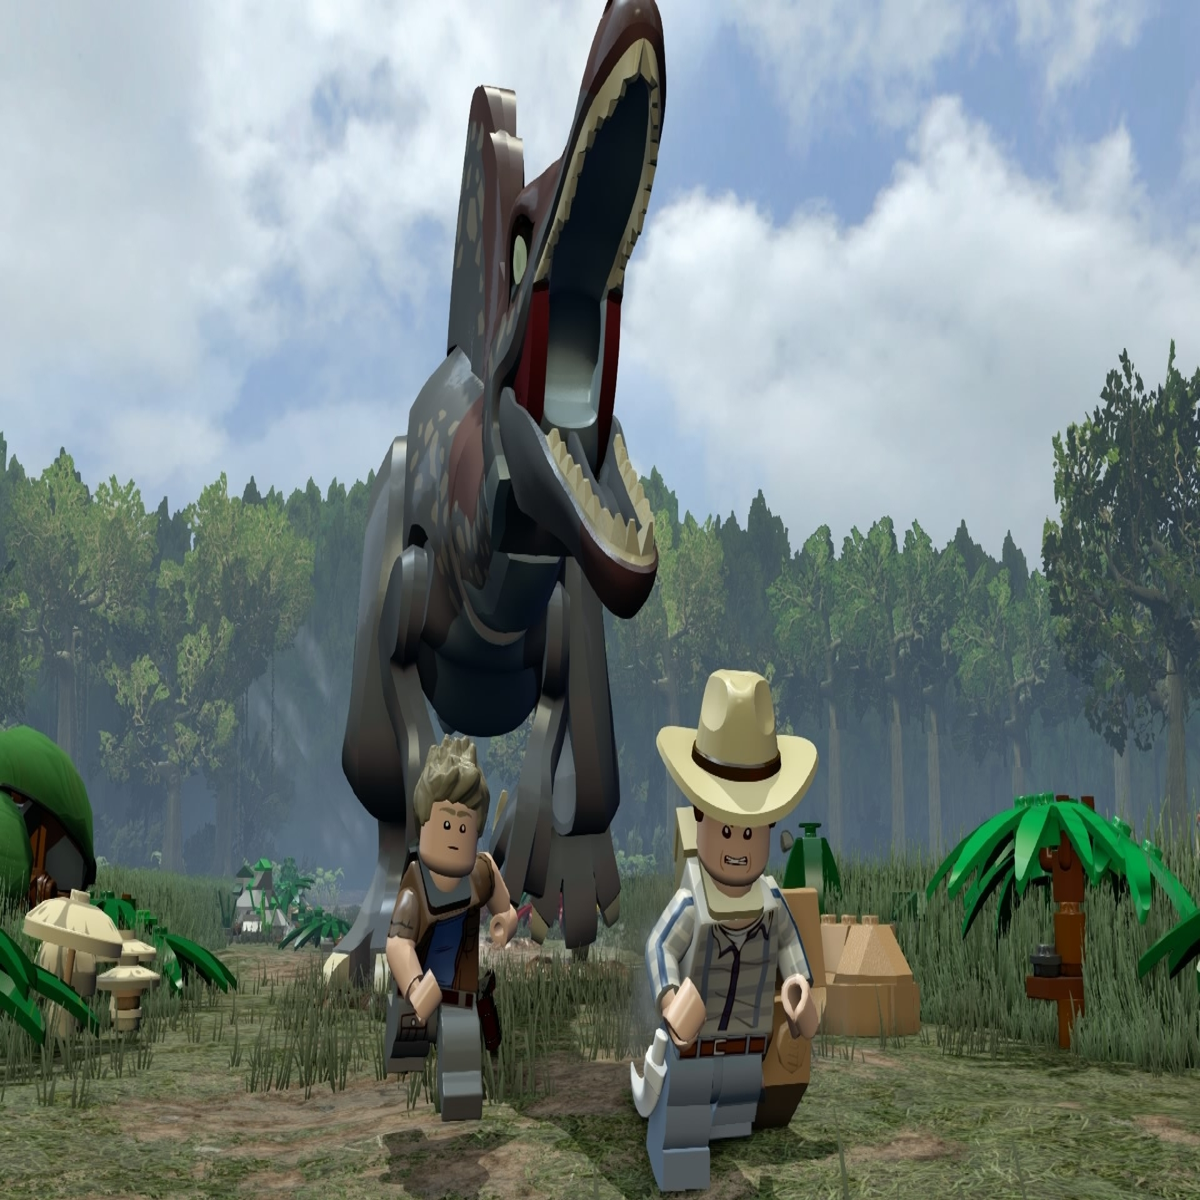 præcedens hård jeg lytter til musik Lego Jurassic World is coming to Switch this September | Eurogamer.net